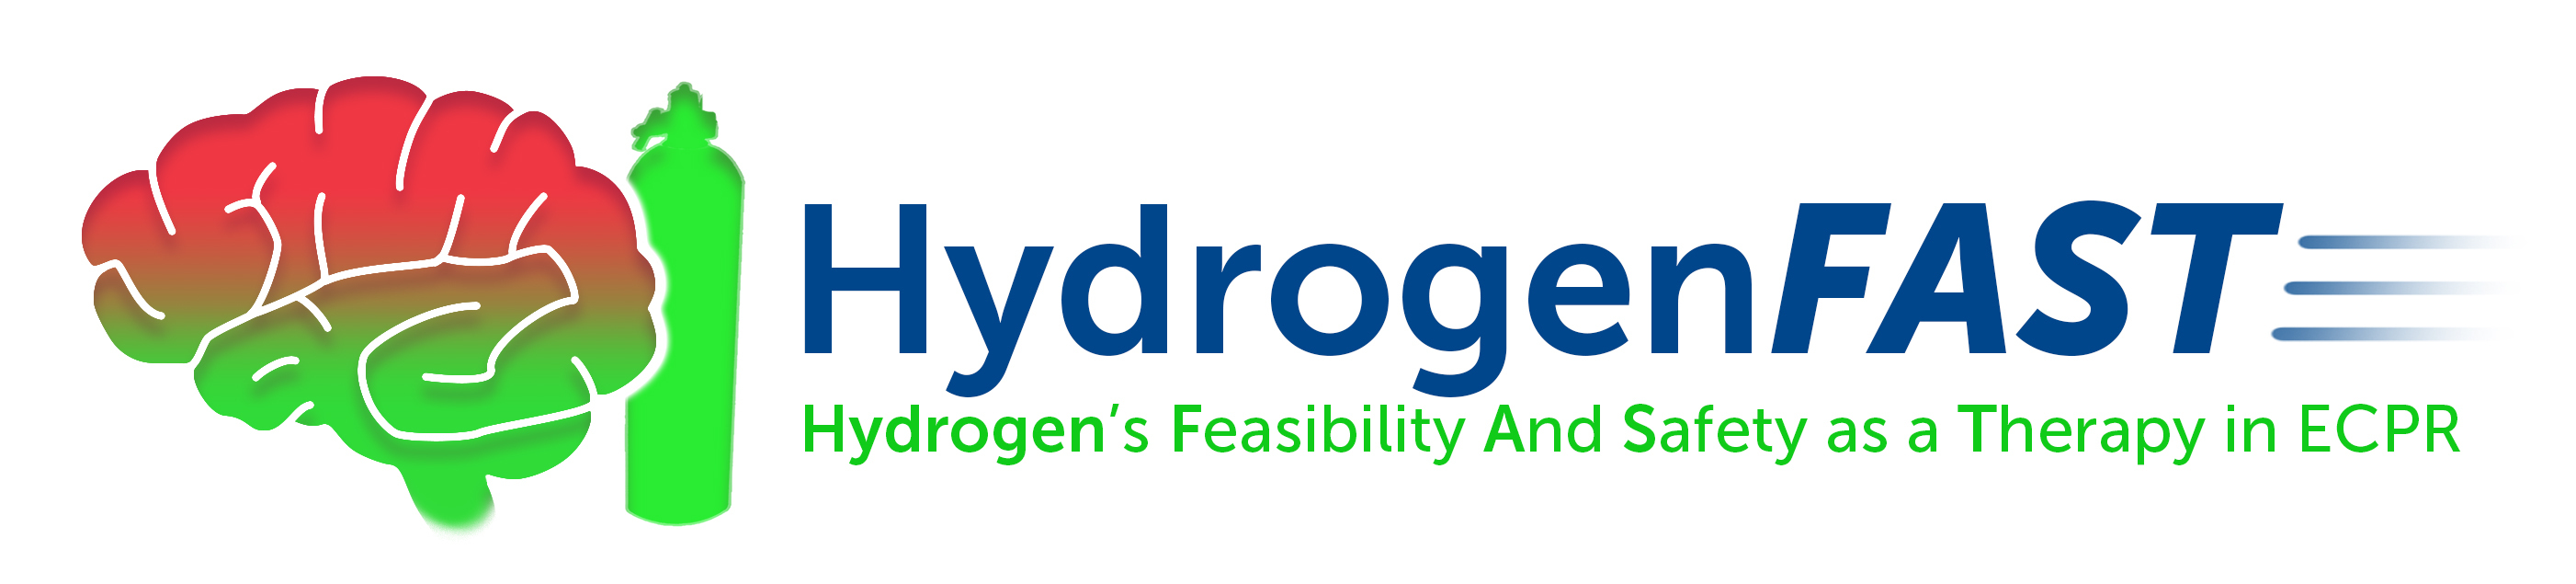 Hydrogen fast logo.